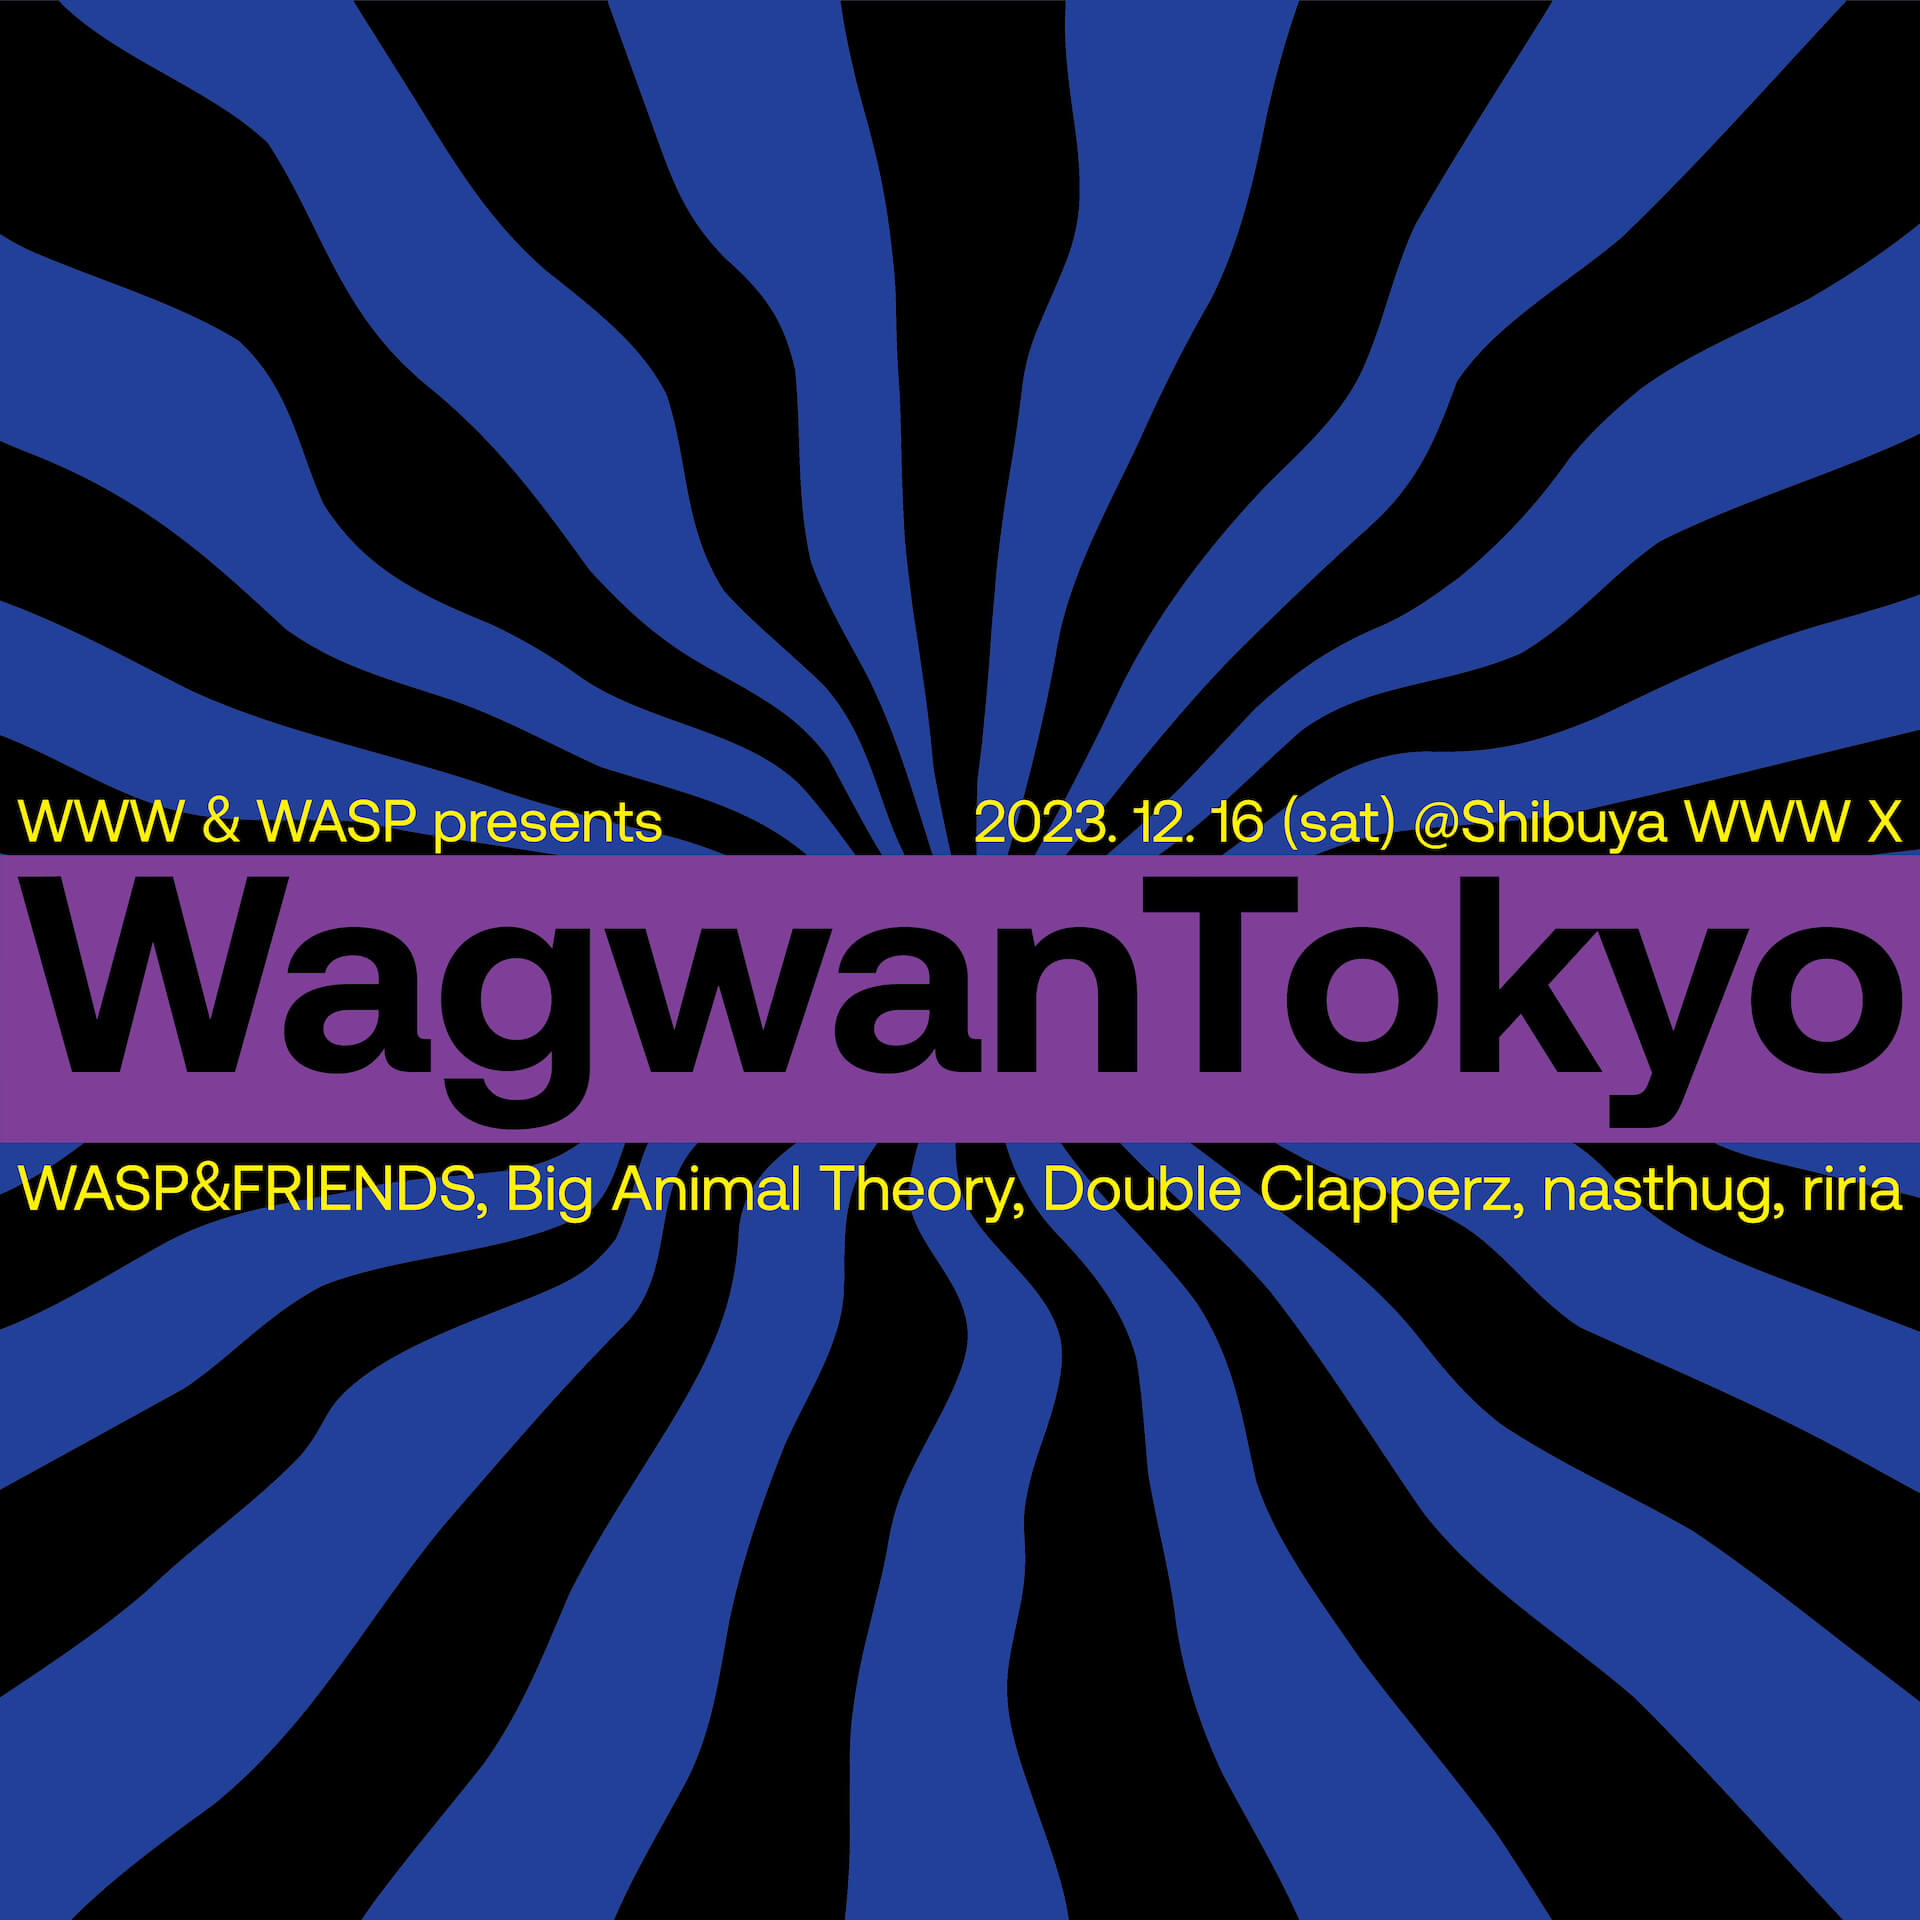 DJユニット・WASPとWWWの共同企画＜WagwanTokyo＞にBig Animal Theory、Double Clapperz 、nasthug、ririaらが出演 music231215-wagwantokyo2